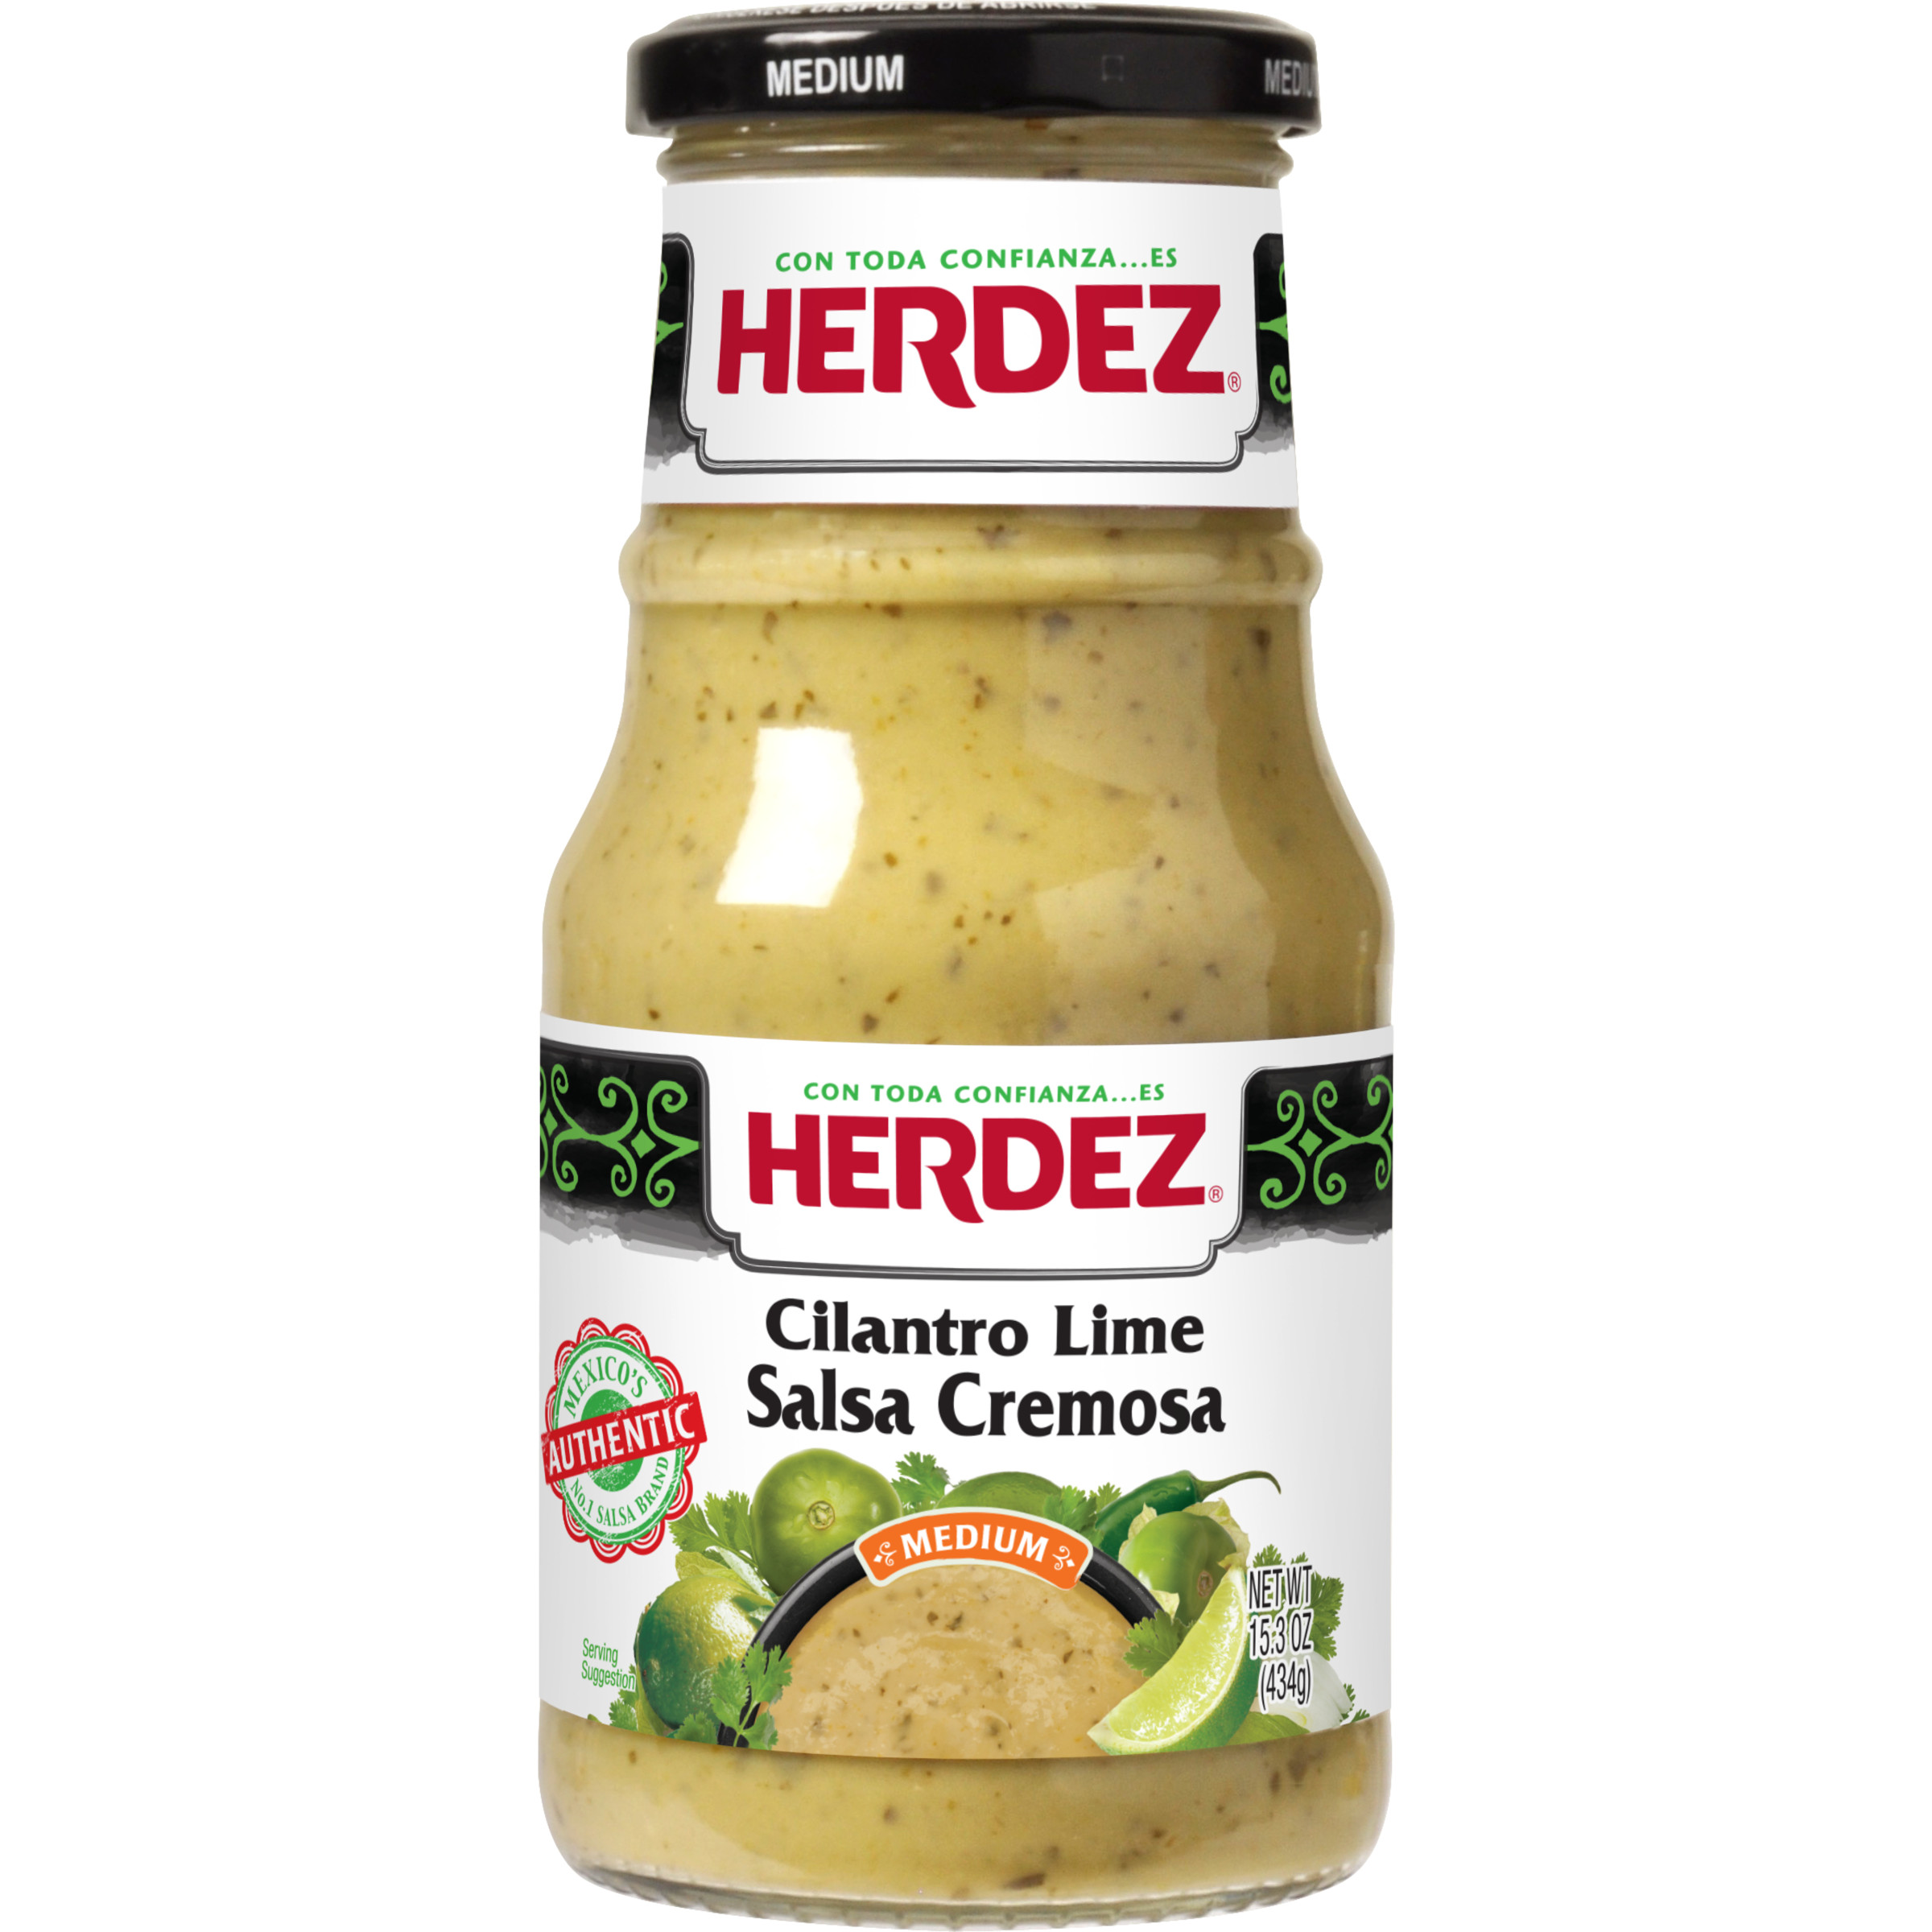 HERDEZ, Cilantro Lime Salsa Cremosa, Mexican Sauce, 15.3 oz Jar - image 1 of 5